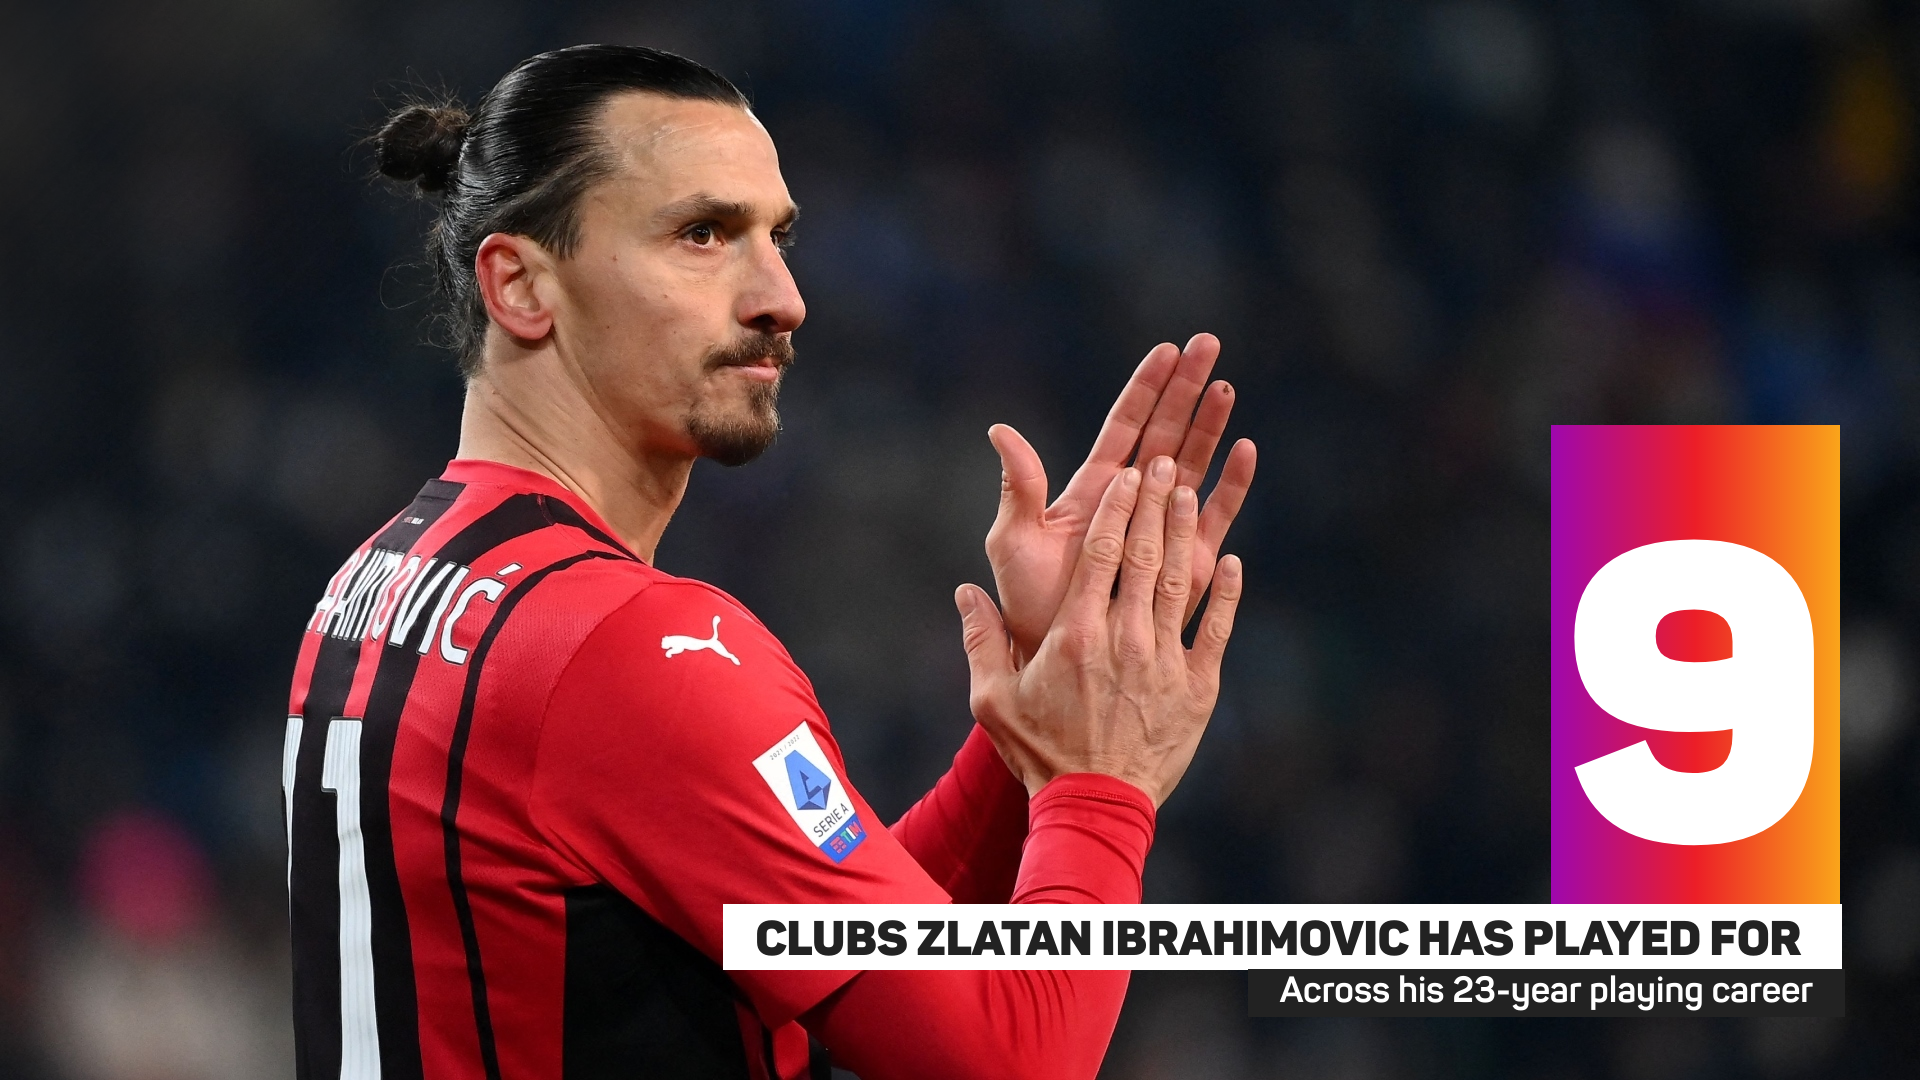 Zlatan Ibrahimovic has played for nine different clubs